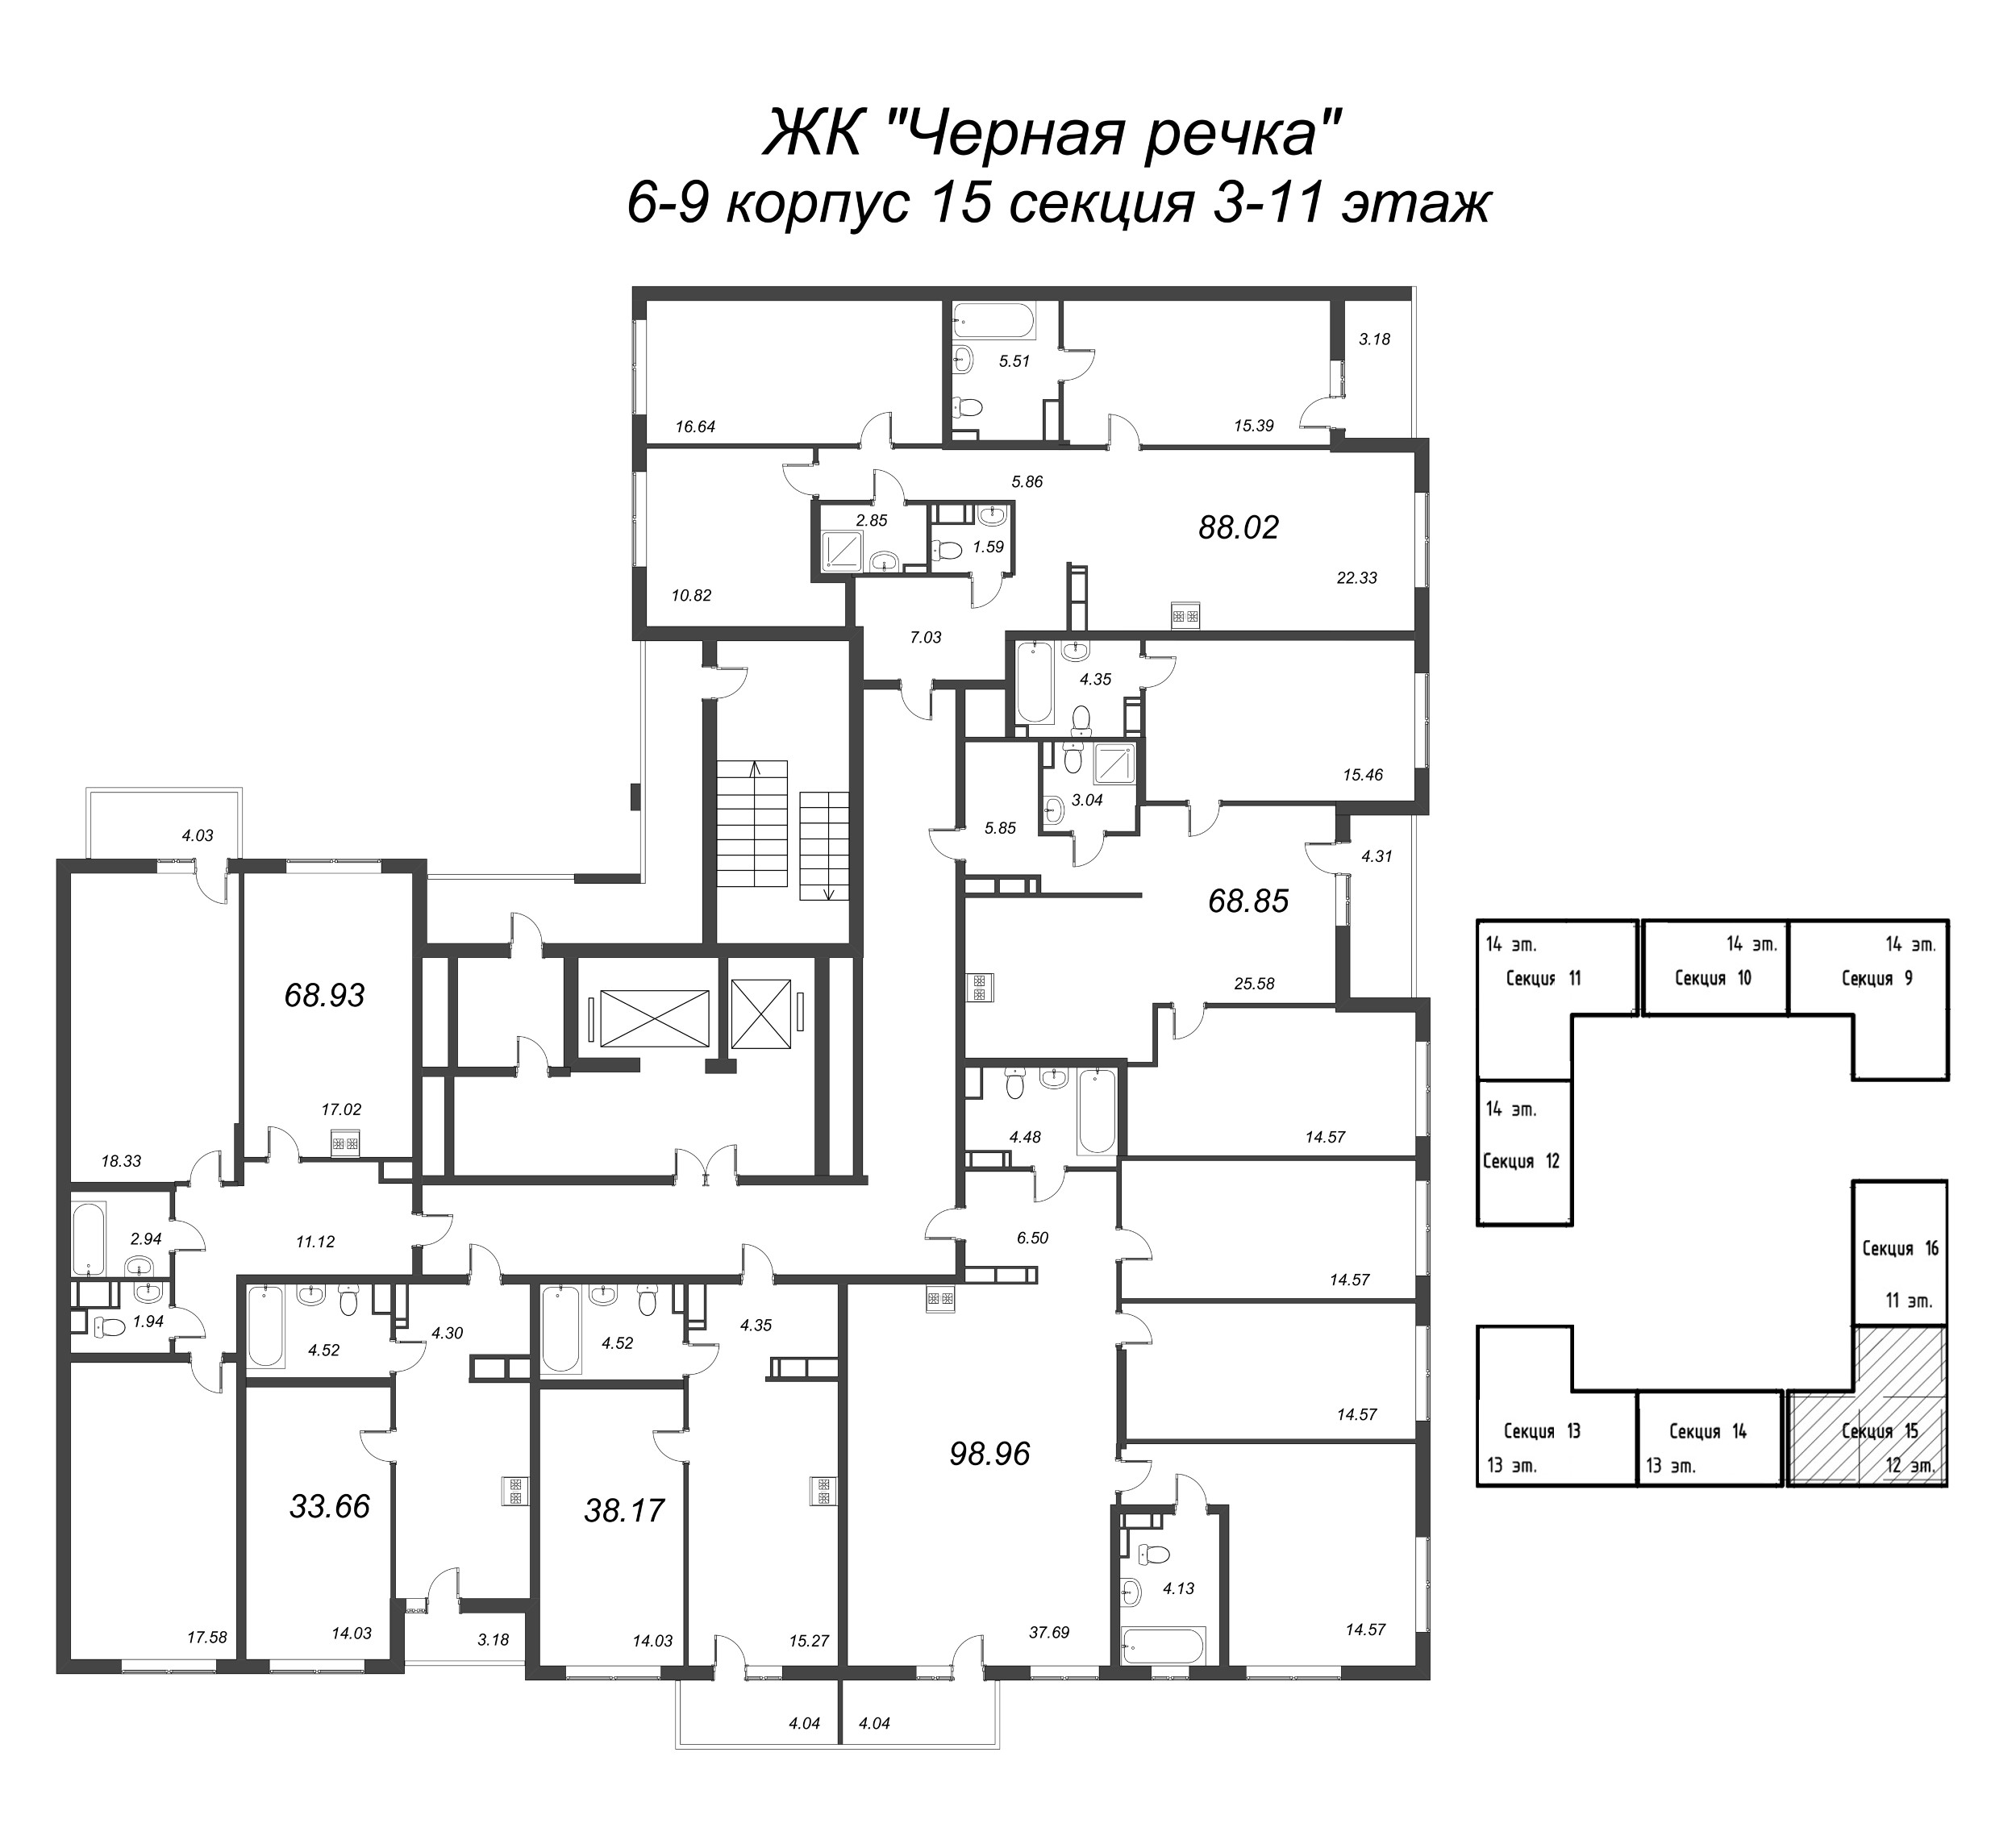 4-комнатная (Евро) квартира, 88.02 м² в ЖК "Чёрная речка от Ильича" - планировка этажа